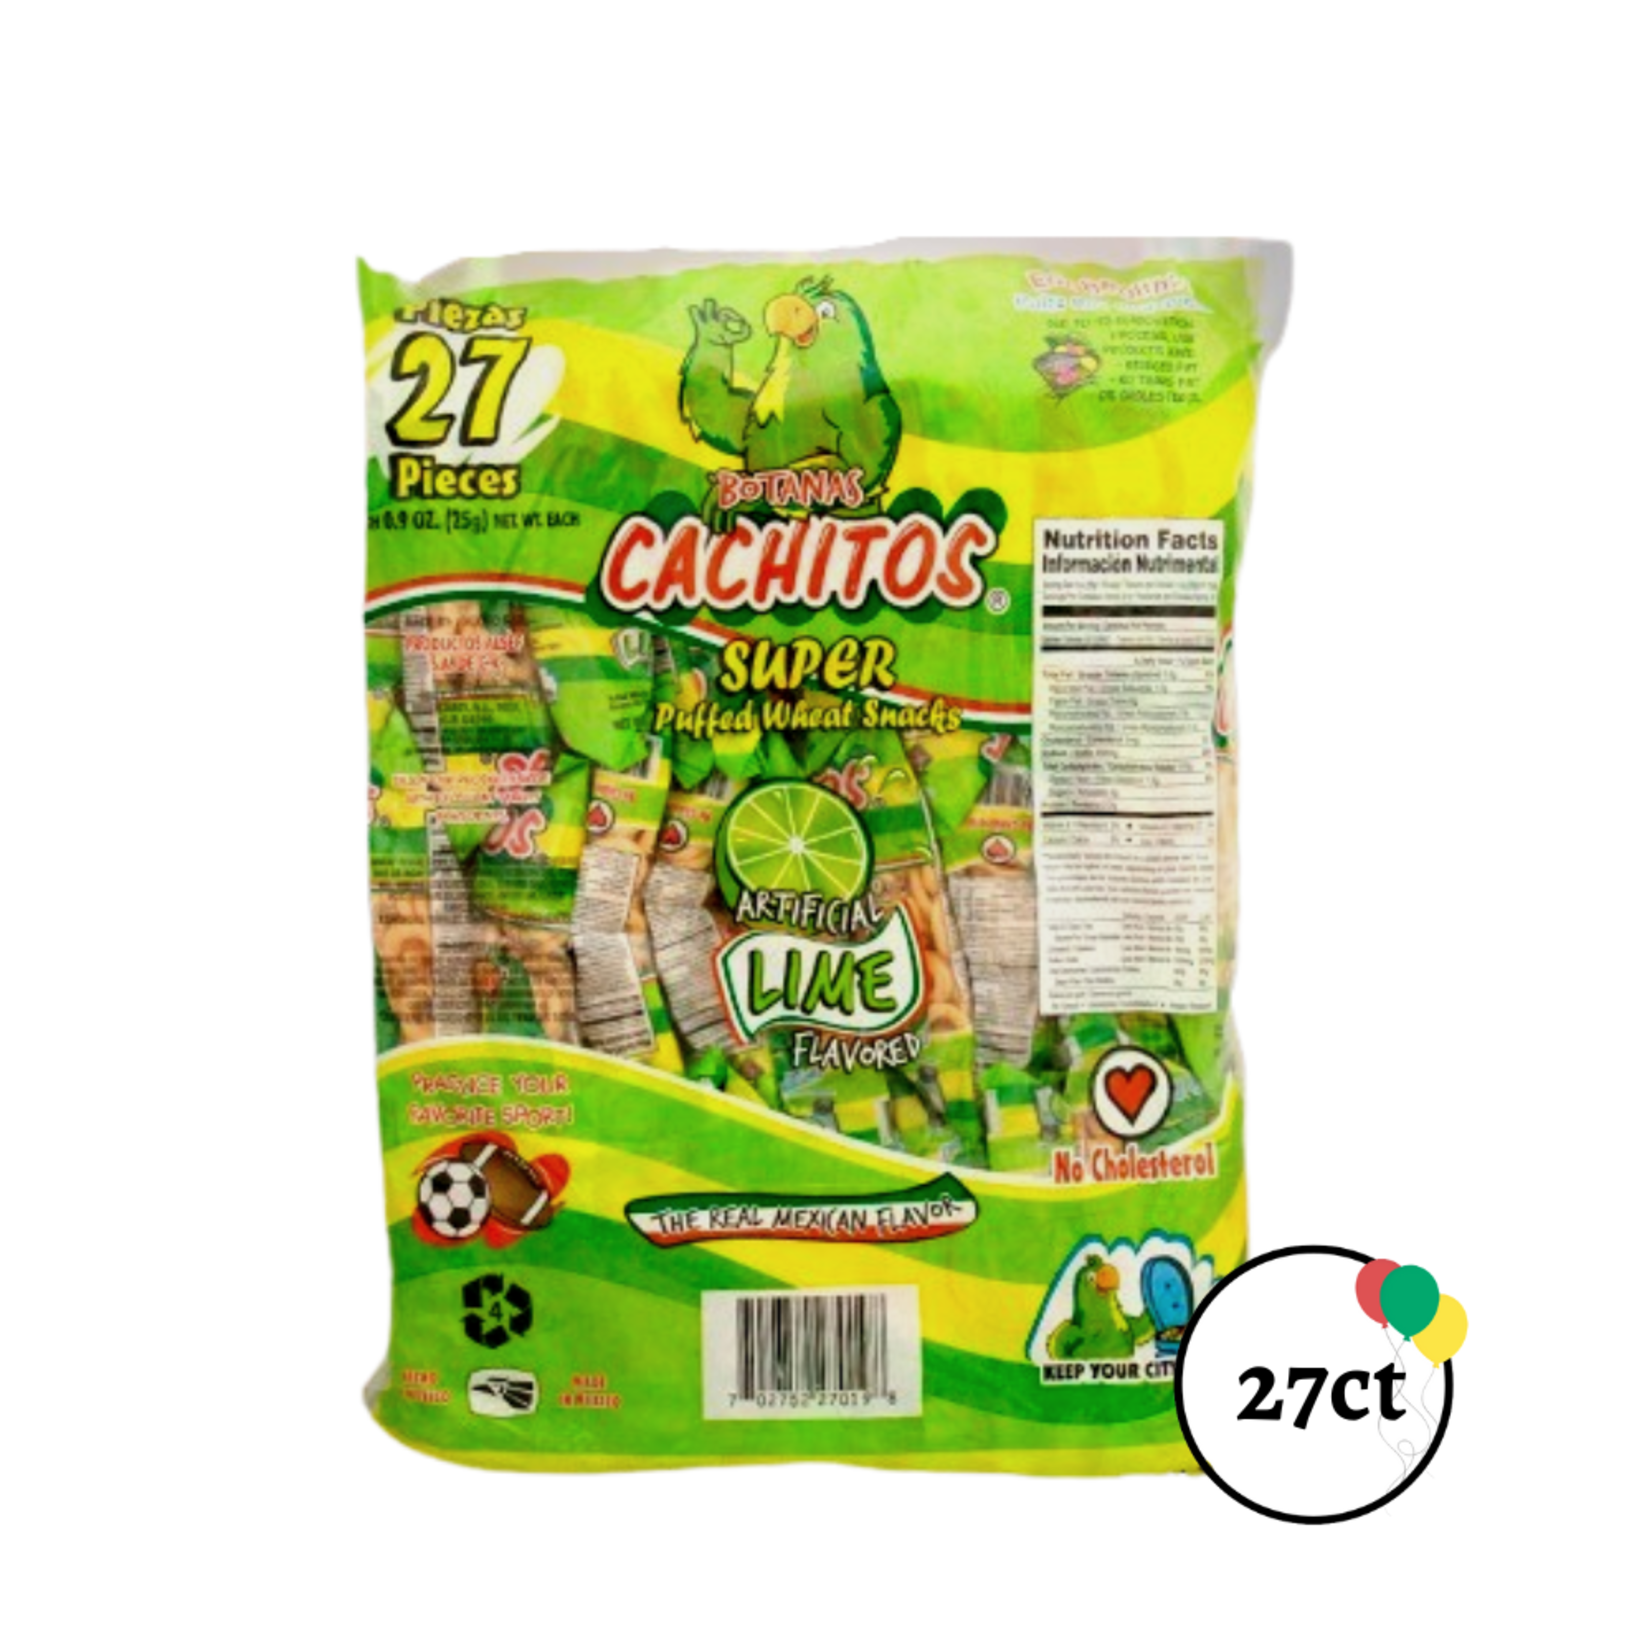 Cachitos Donita Lime Flavor 27ct